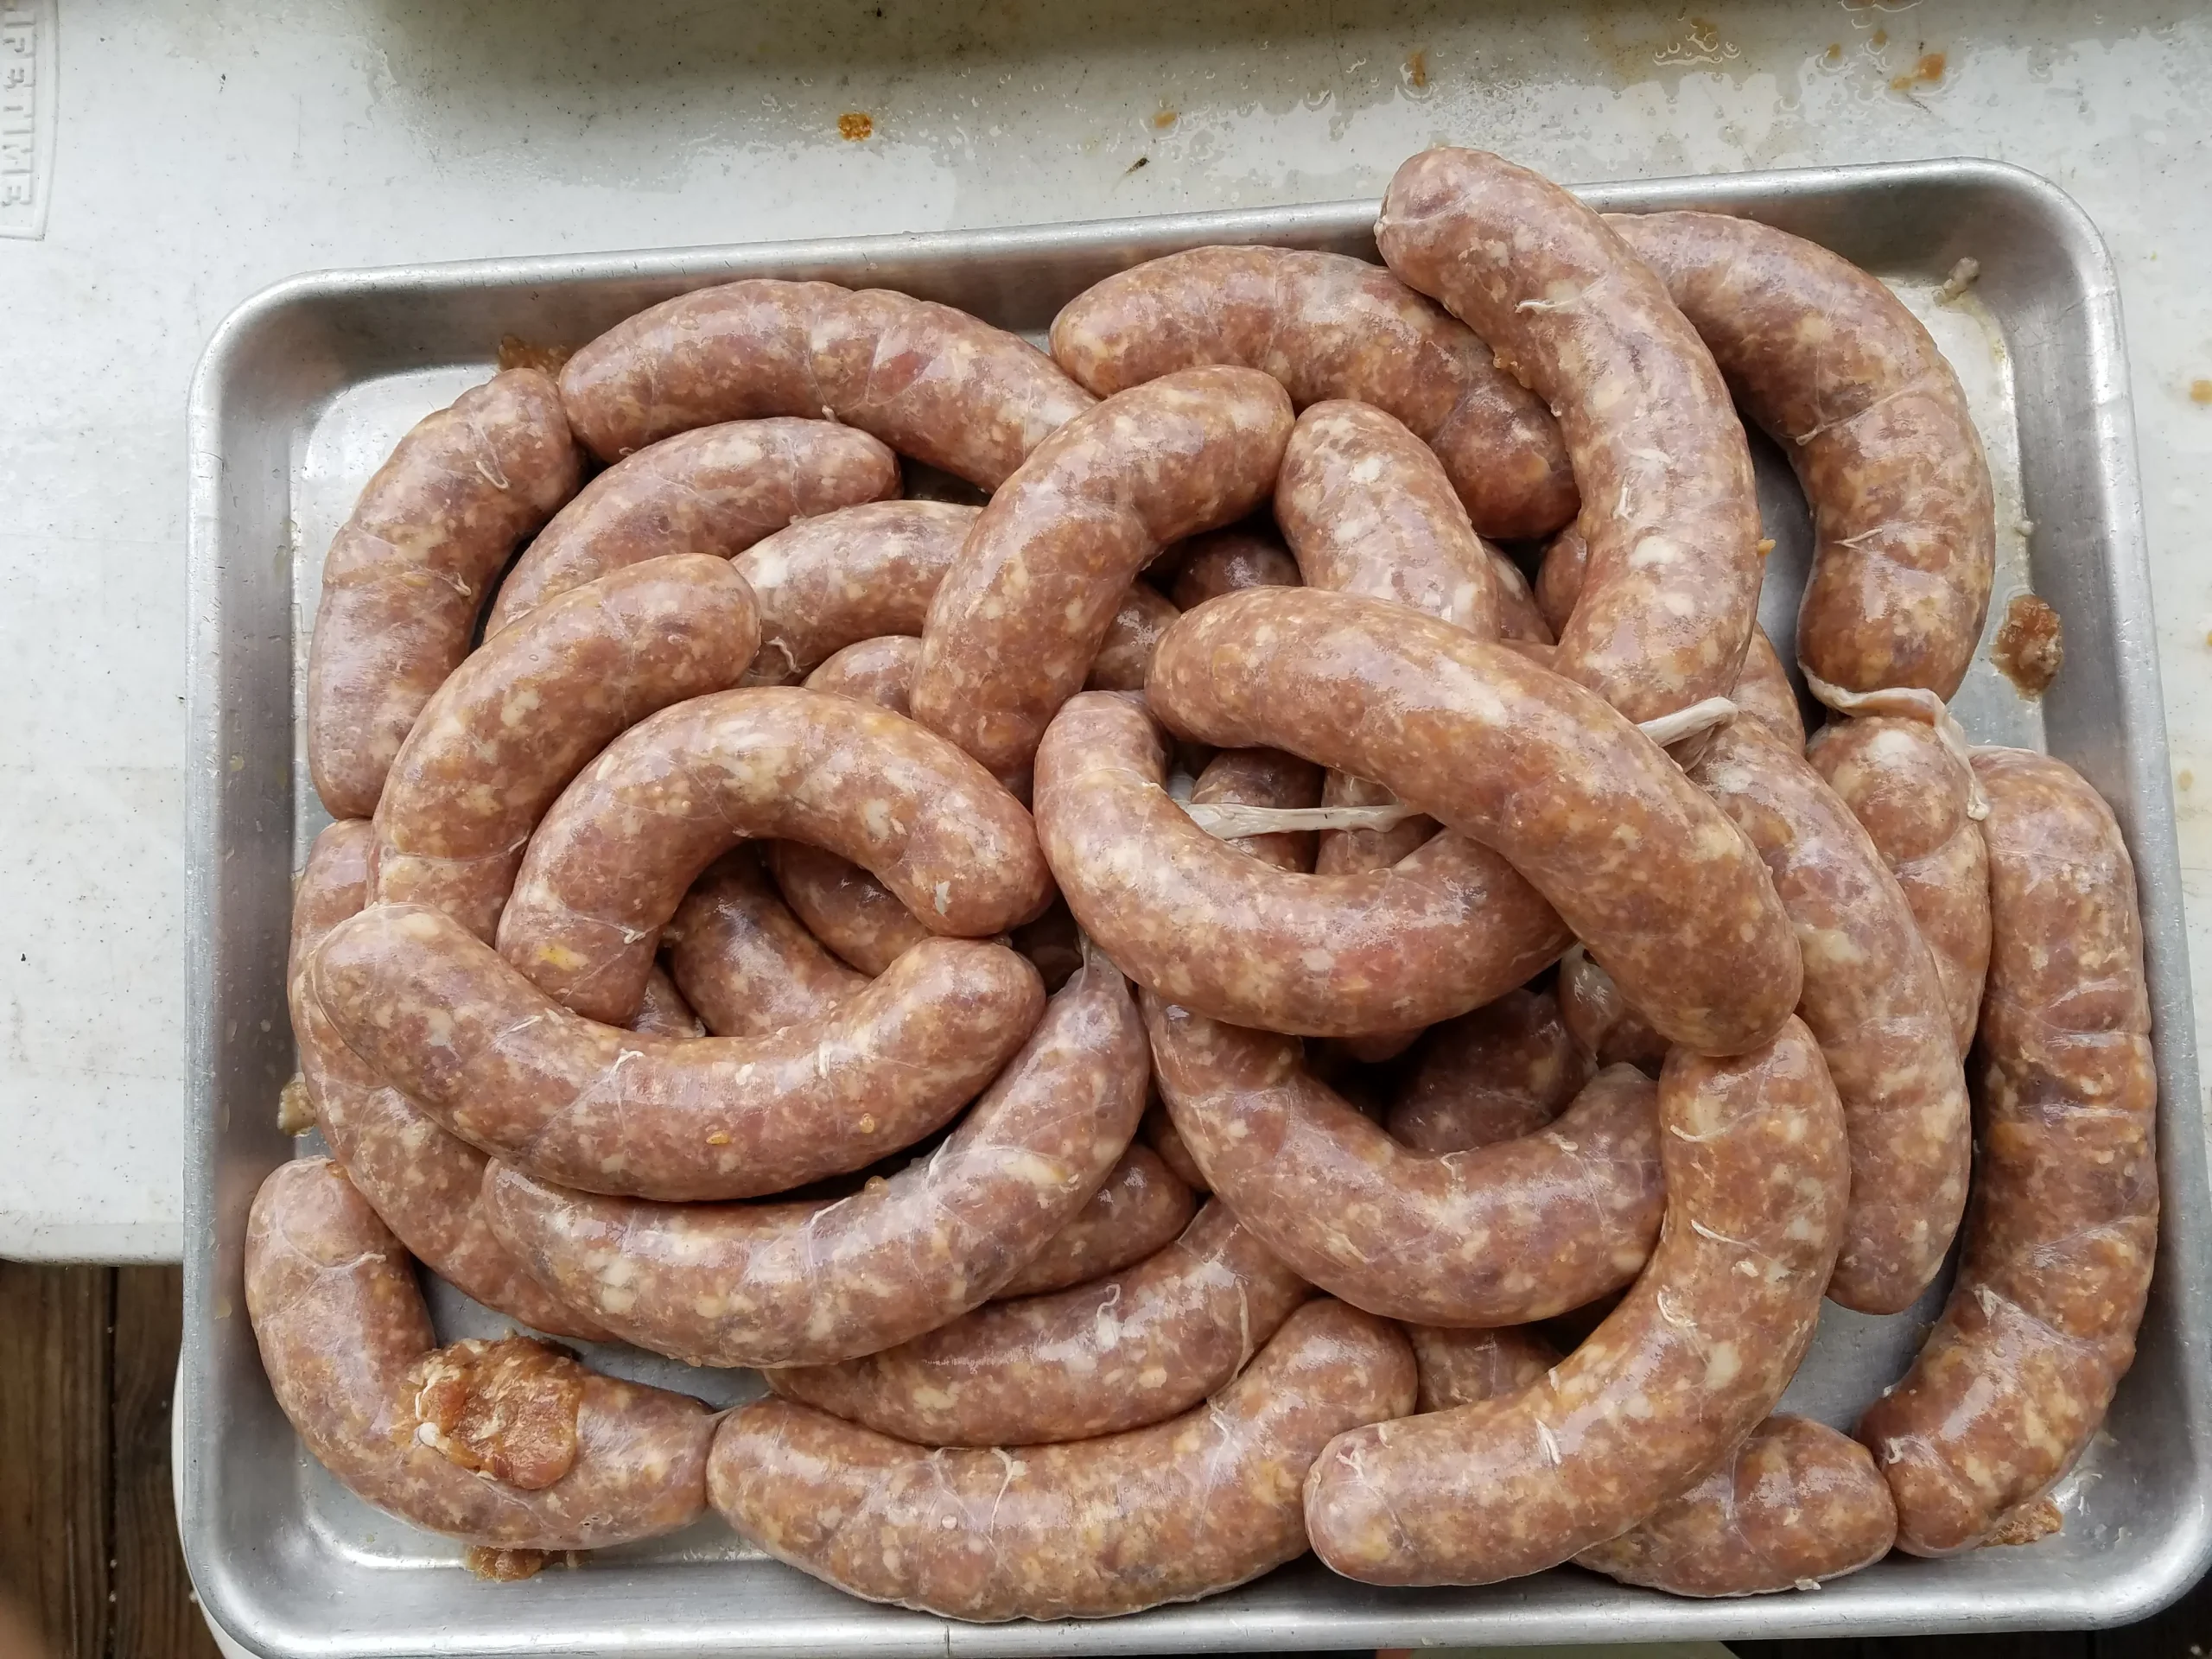 smoked deer sausage recipes - What is deer sausage good for